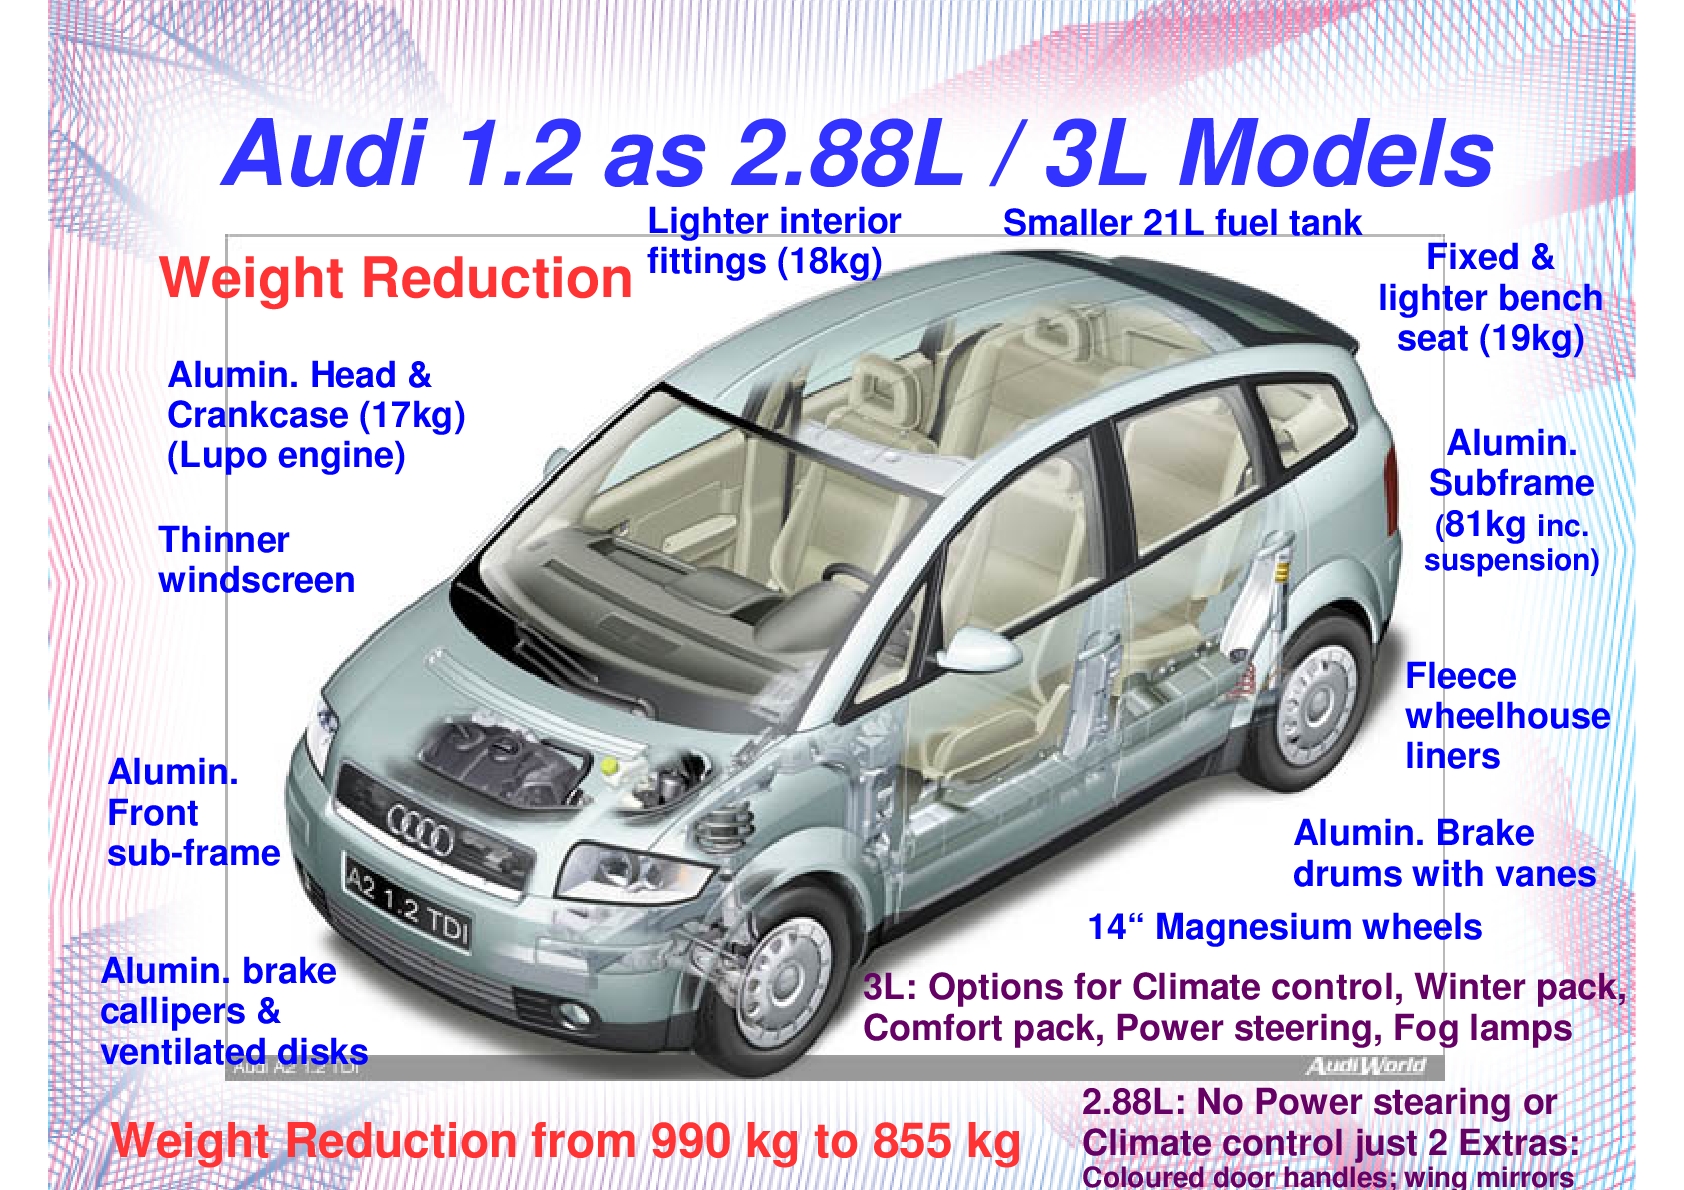 Audi A2 U3A Talk v15 slide 52 2L Weight Reduction.jpg